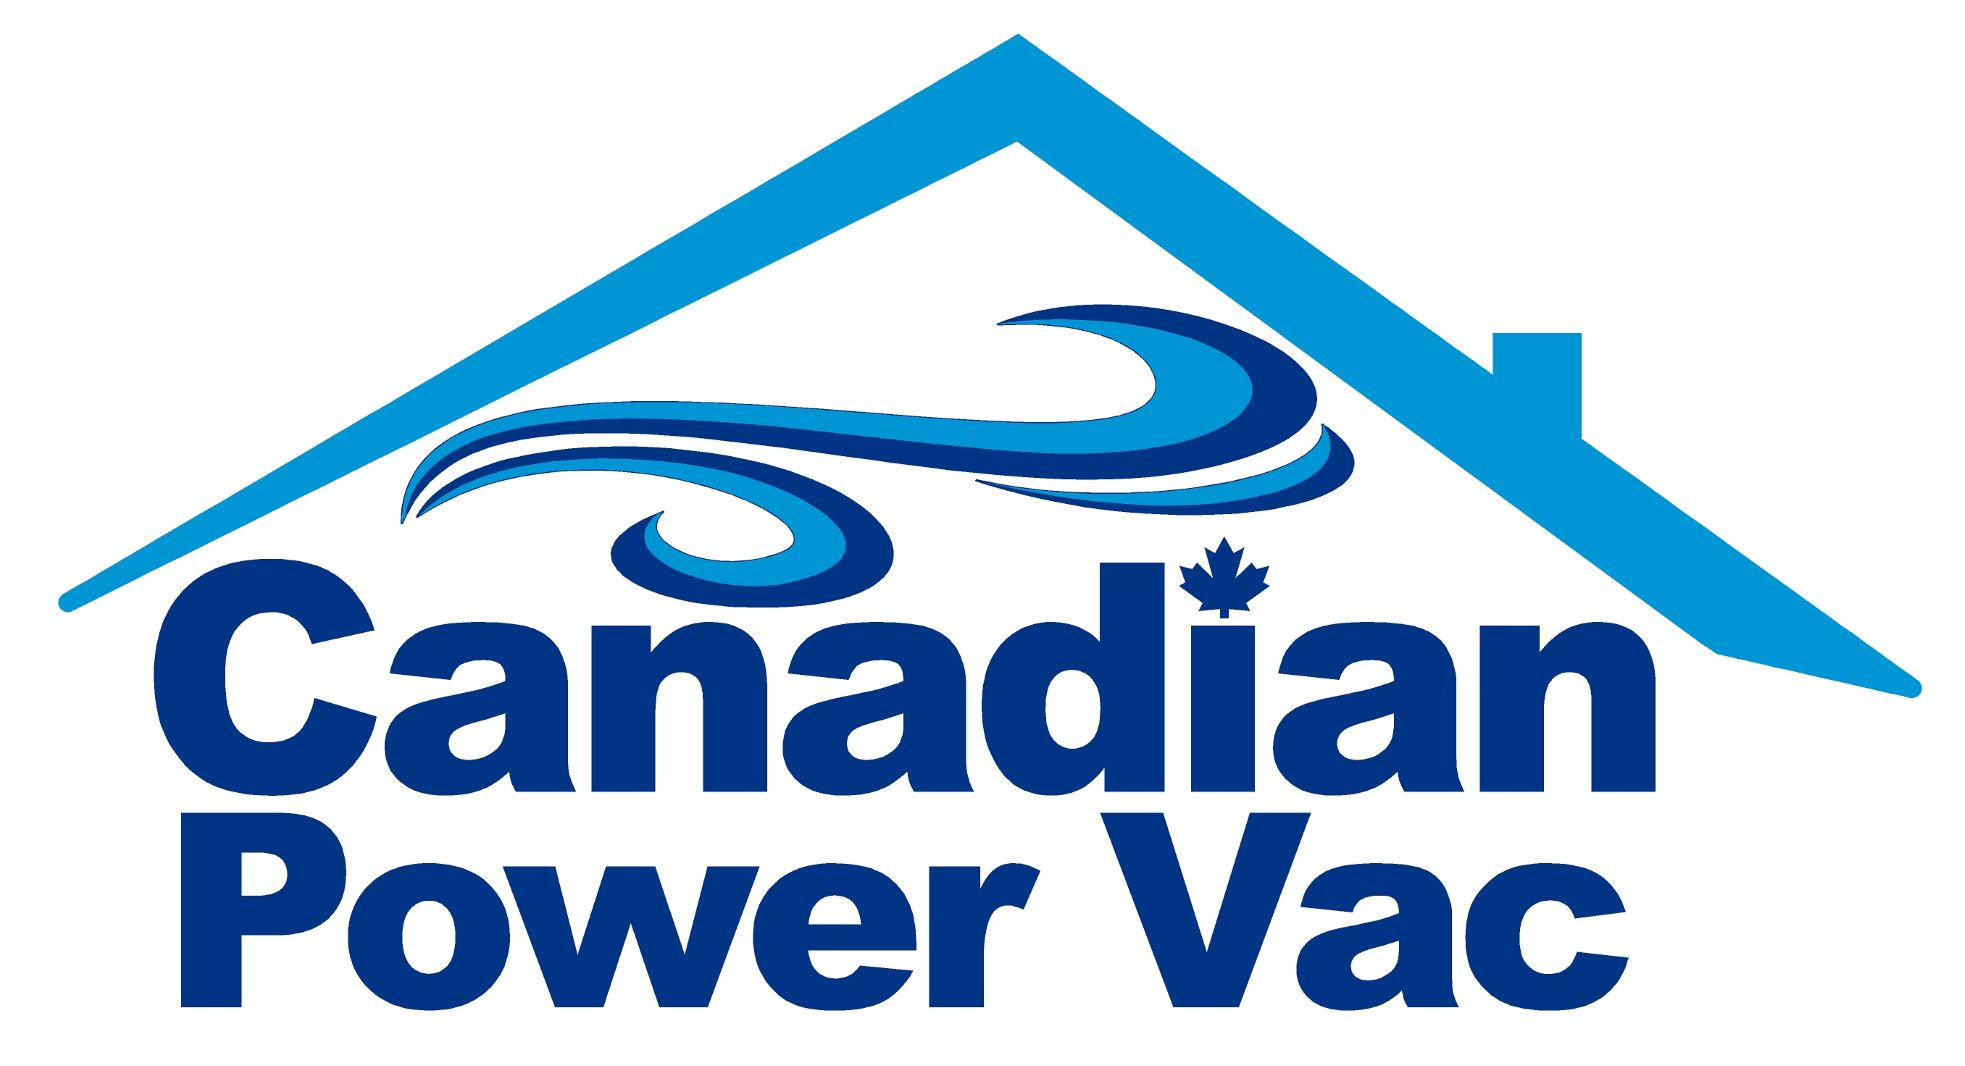 Canadian Power Vac